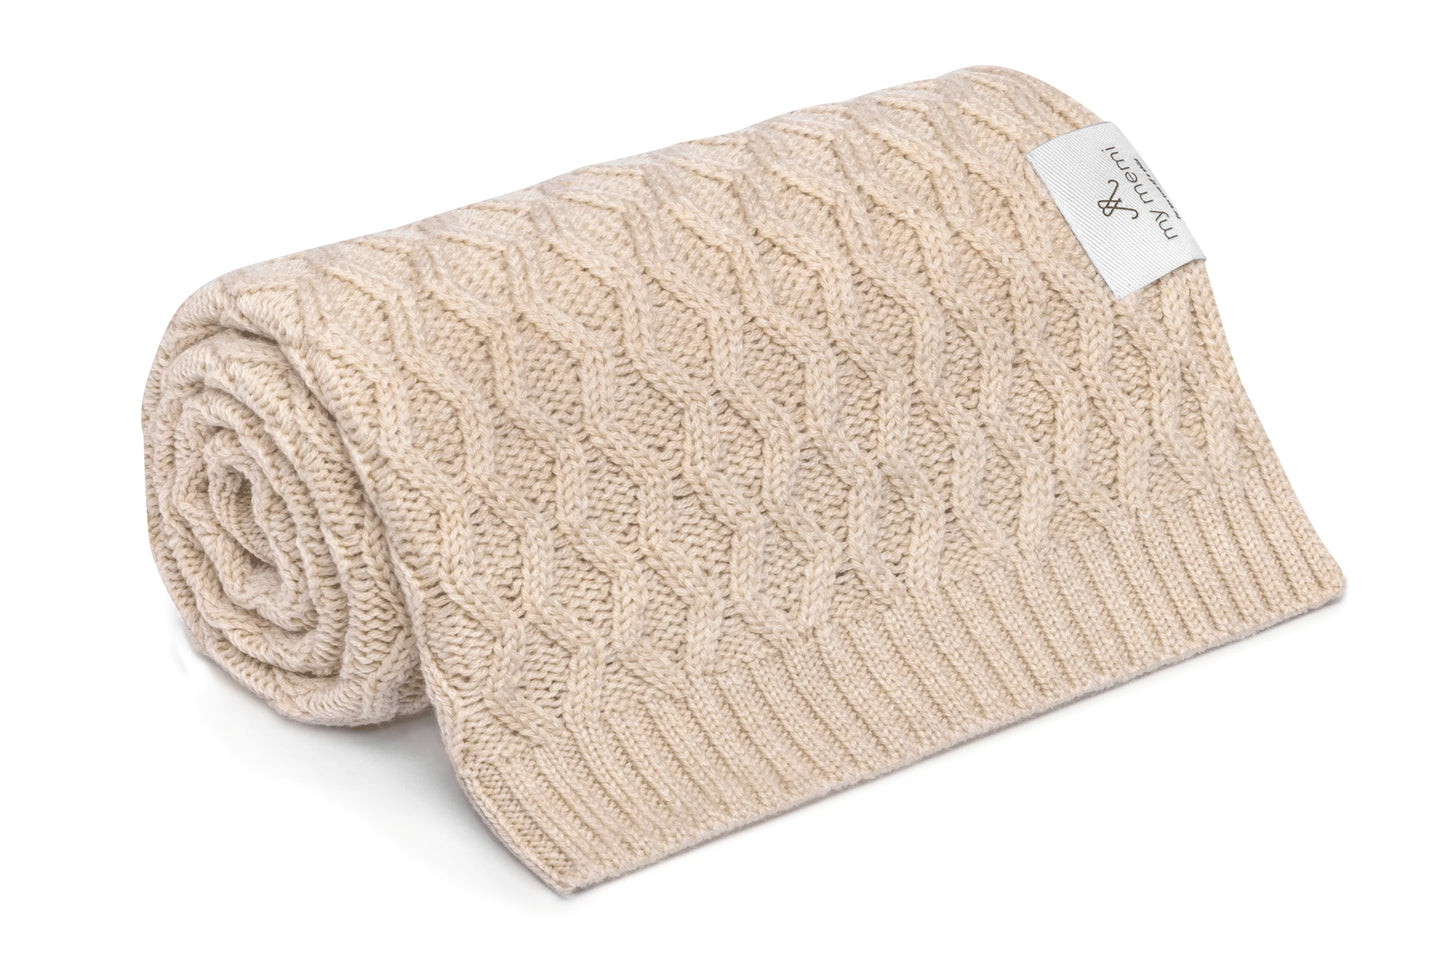 100% Natural Merino Wool Blanket